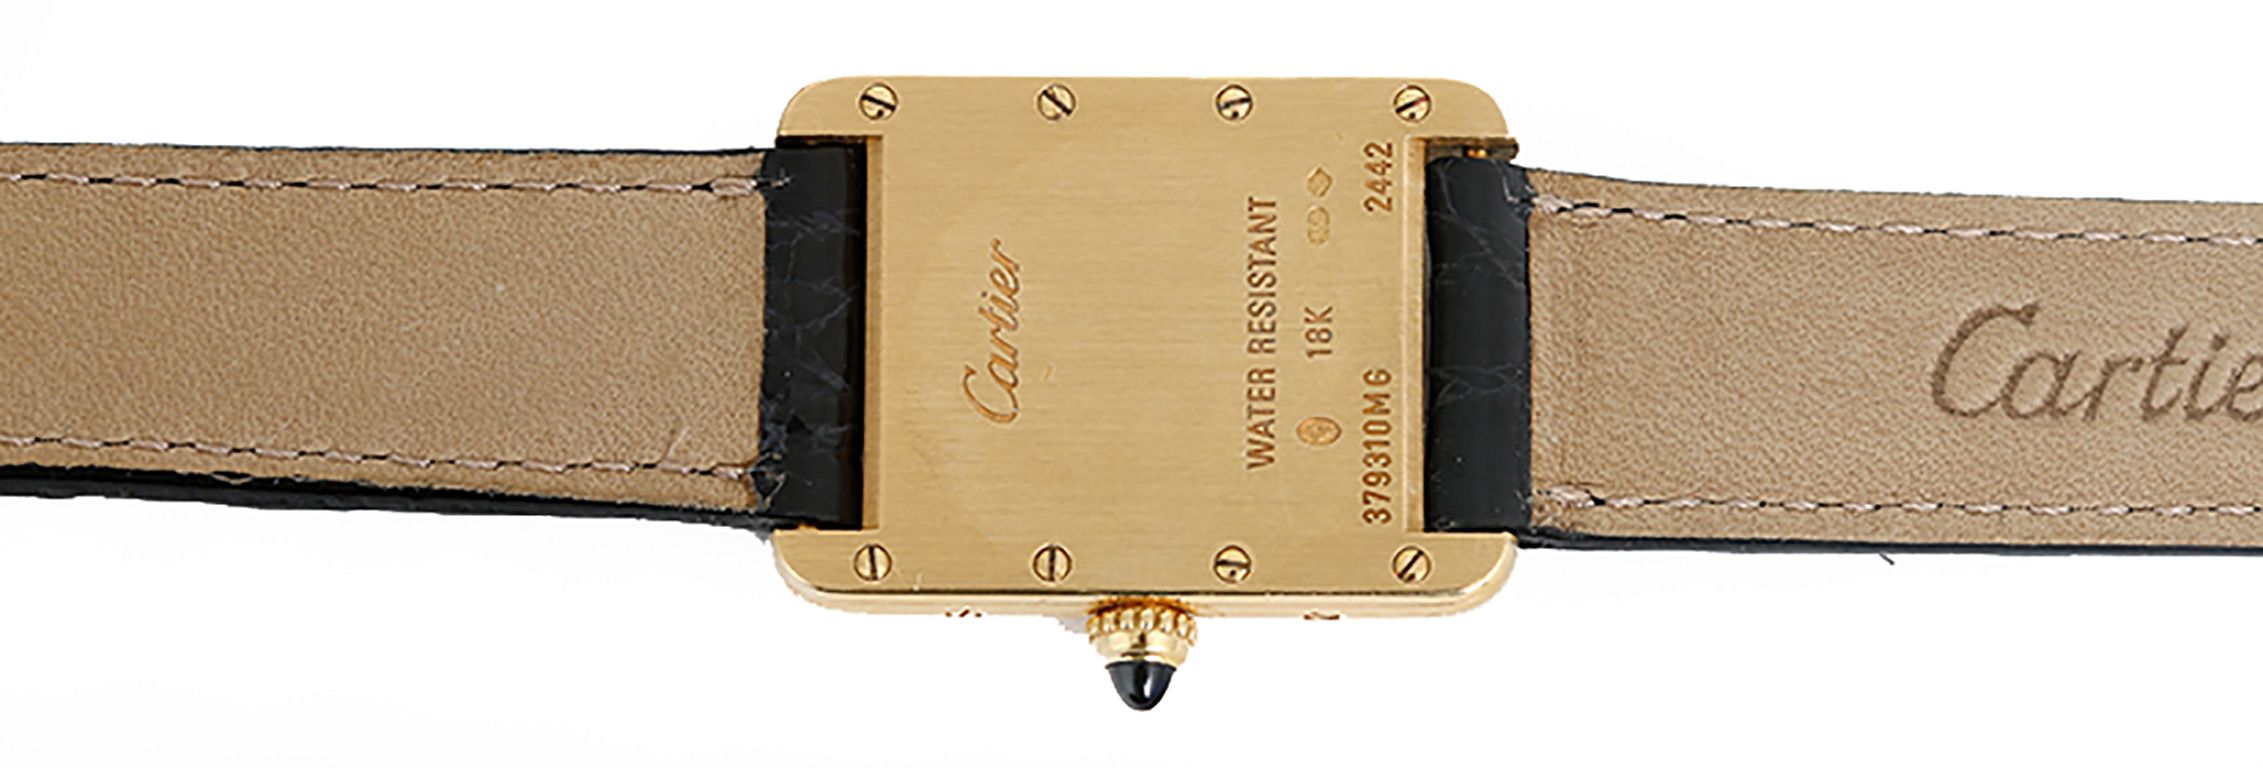 Cartier+Tank+Gold+Women%27s+Watch+-+366001 for sale online